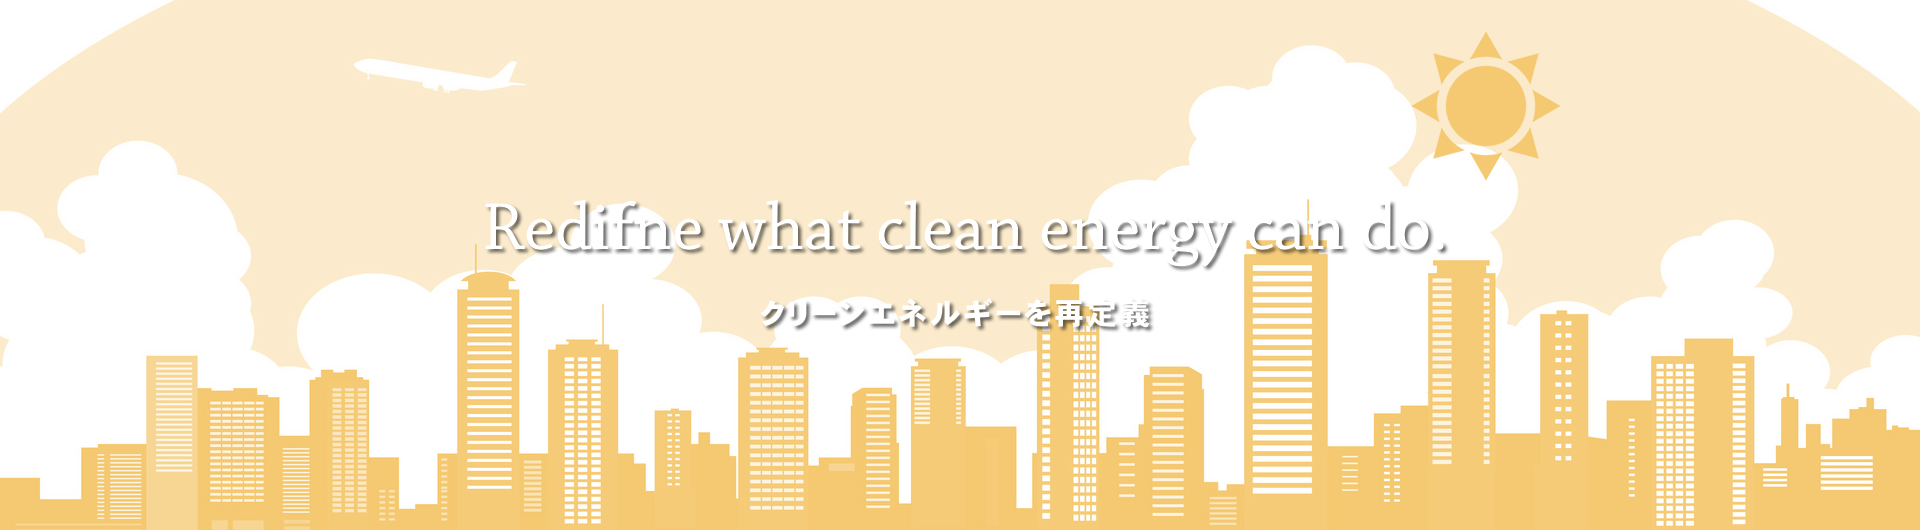 Redifne what clean energy can do. クリーンエネルギーを再定義